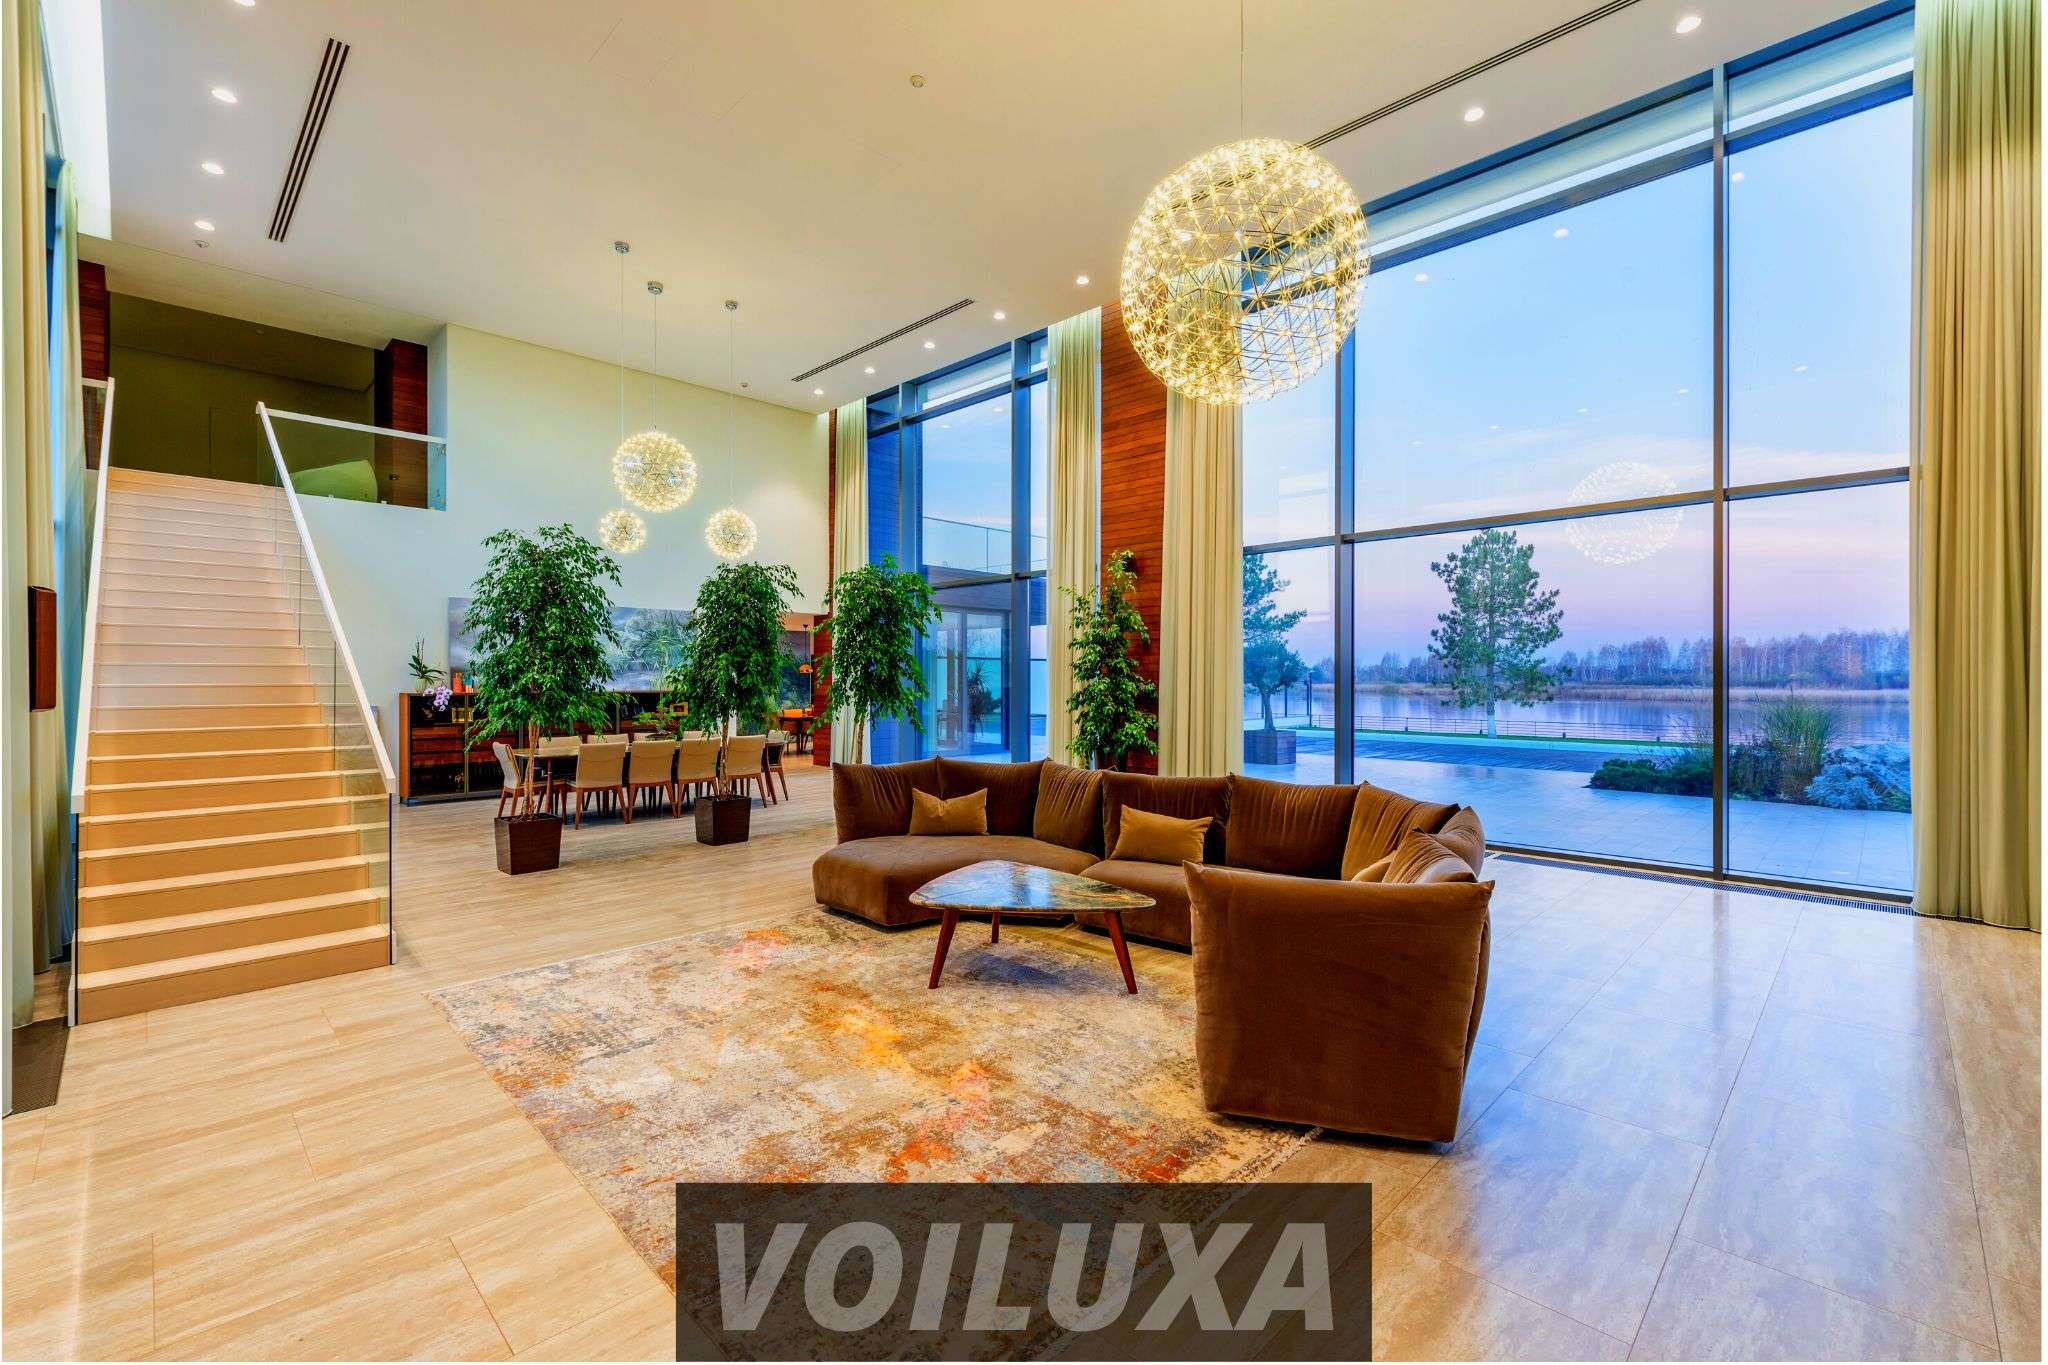 10 Best Luxury Apartments in Houston